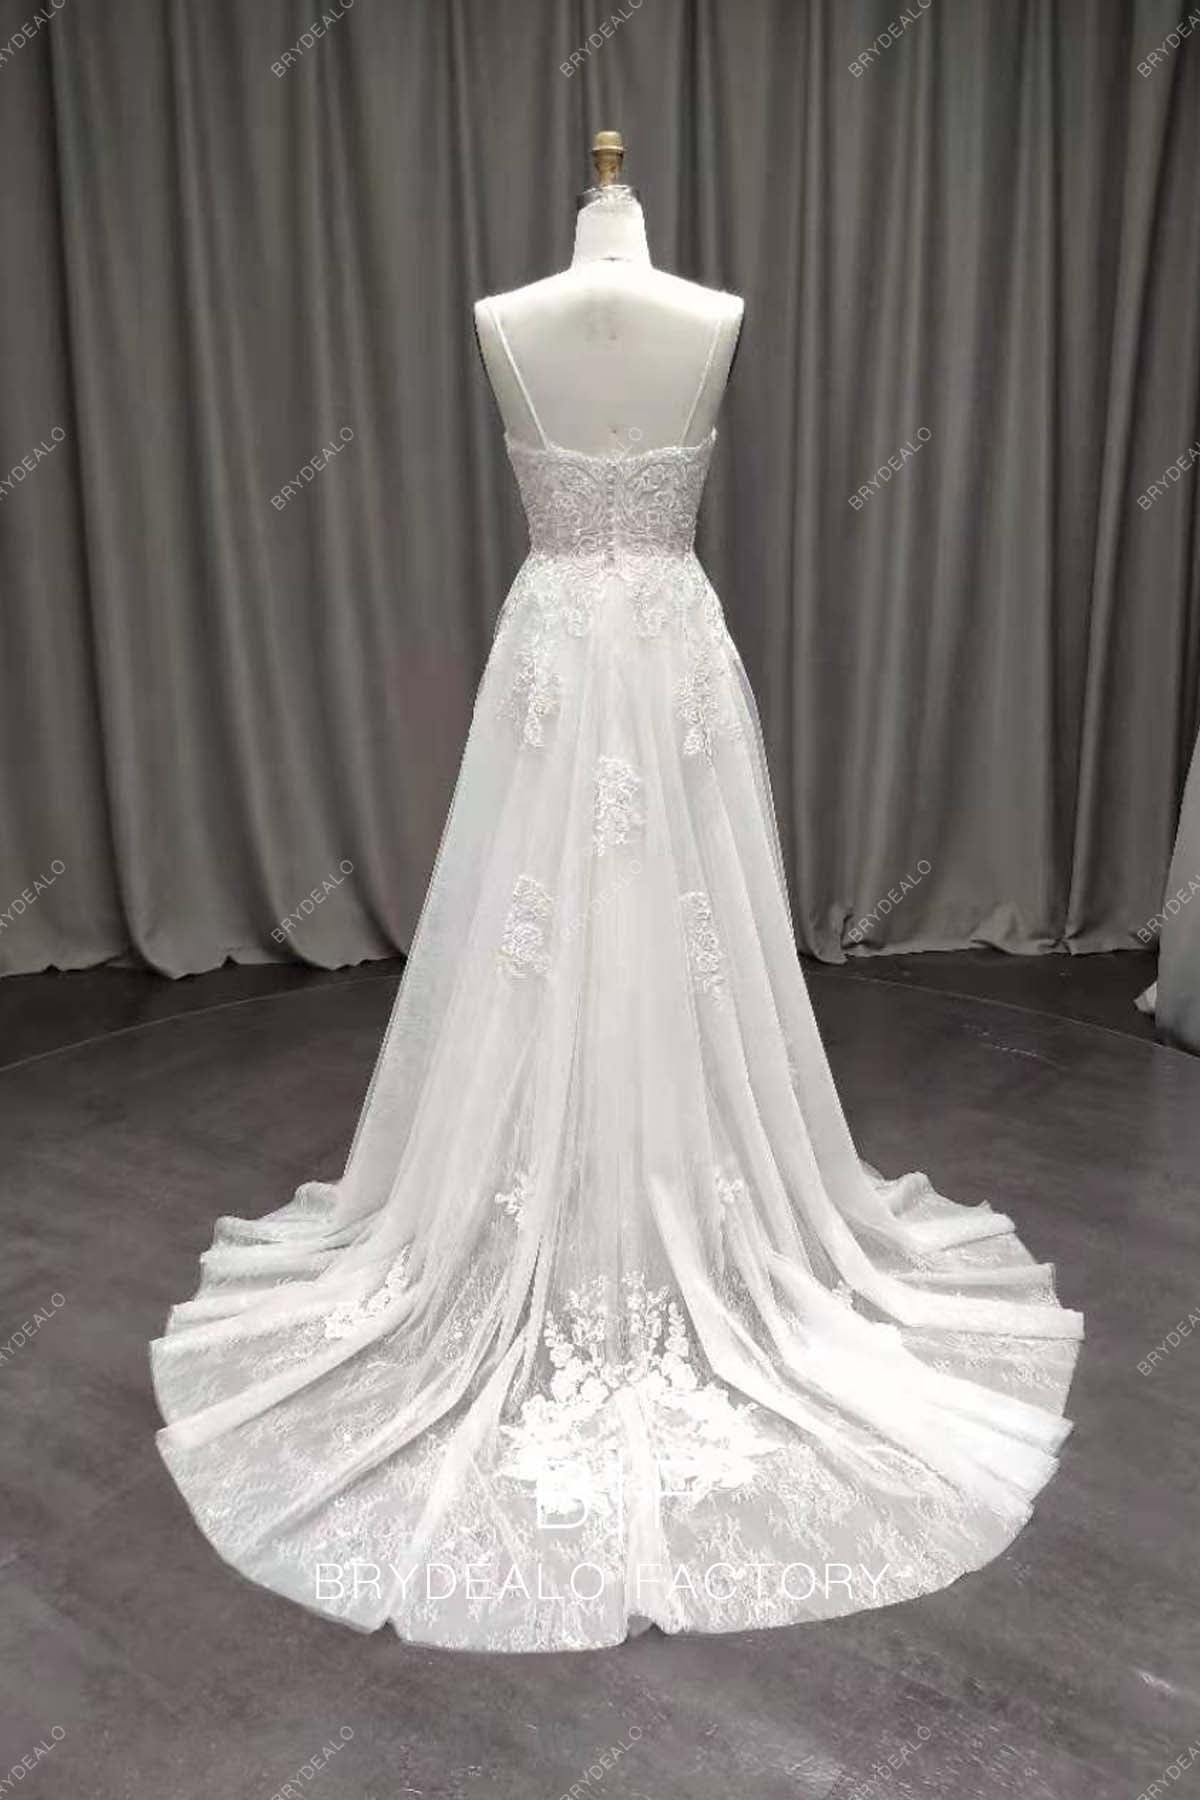 Spaghetti Straps Corset Lace Ball Gown Wedding Dress